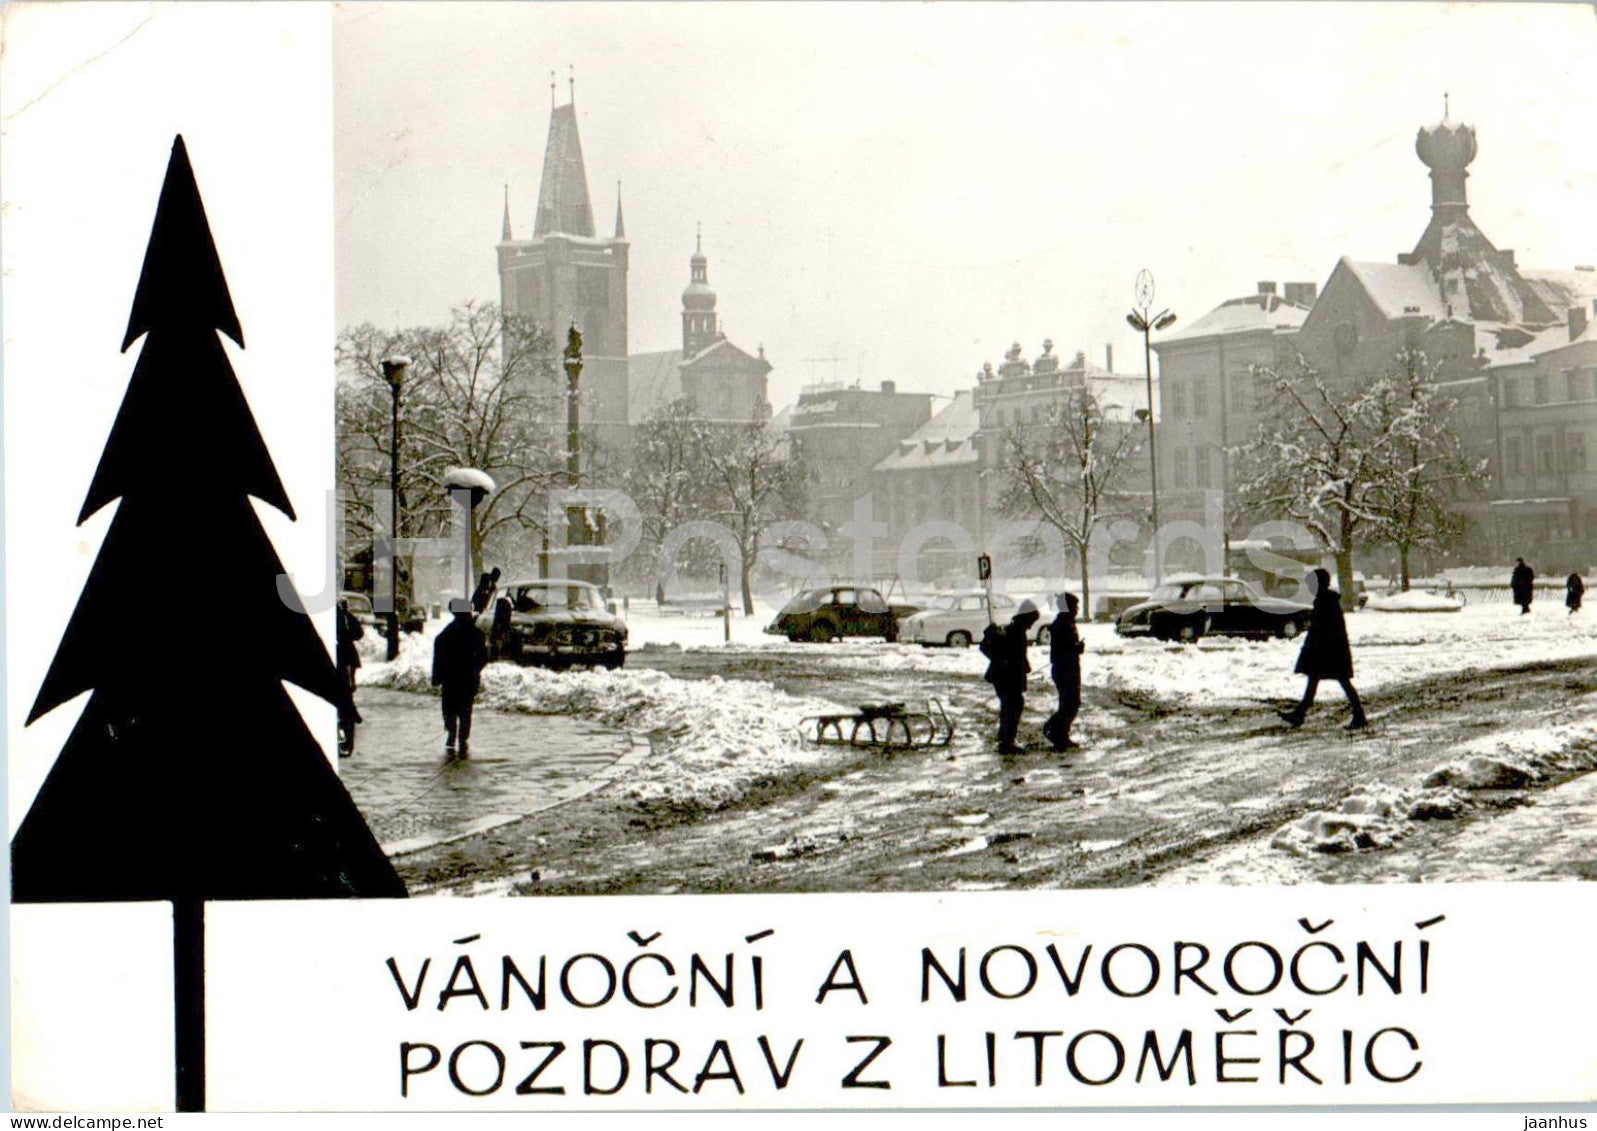 Vanocni a Novorocni Pozdrav z Litomeric - Christmas and New Year Greetings - car - Czech Repubic - Czechoslovakia - used - JH Postcards